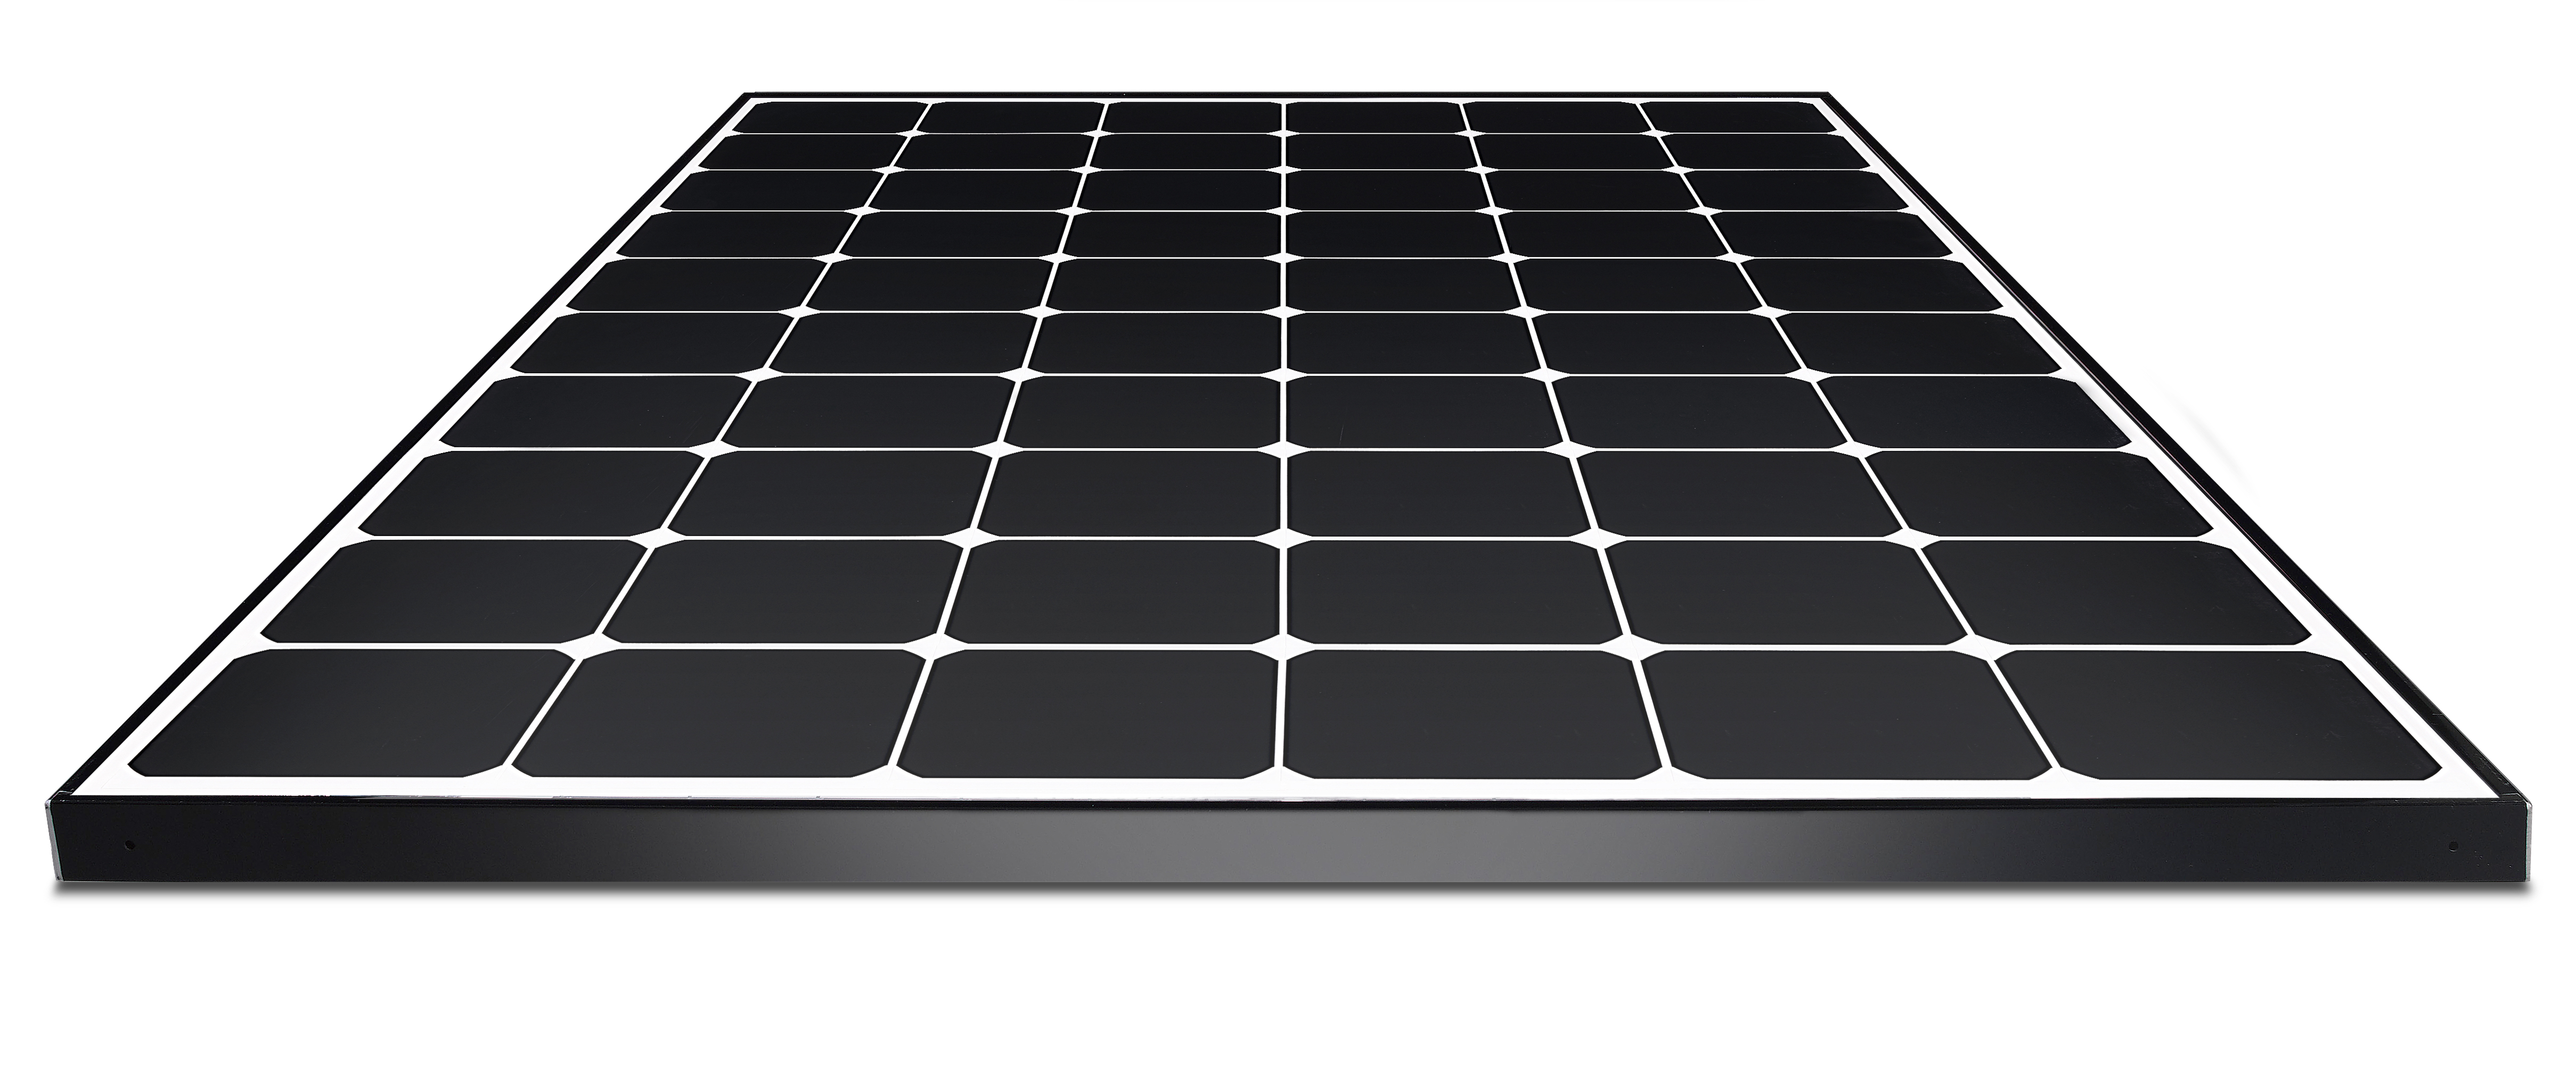 lg-electronics-to-open-alabama-solar-panel-plant-creating-160-jobs